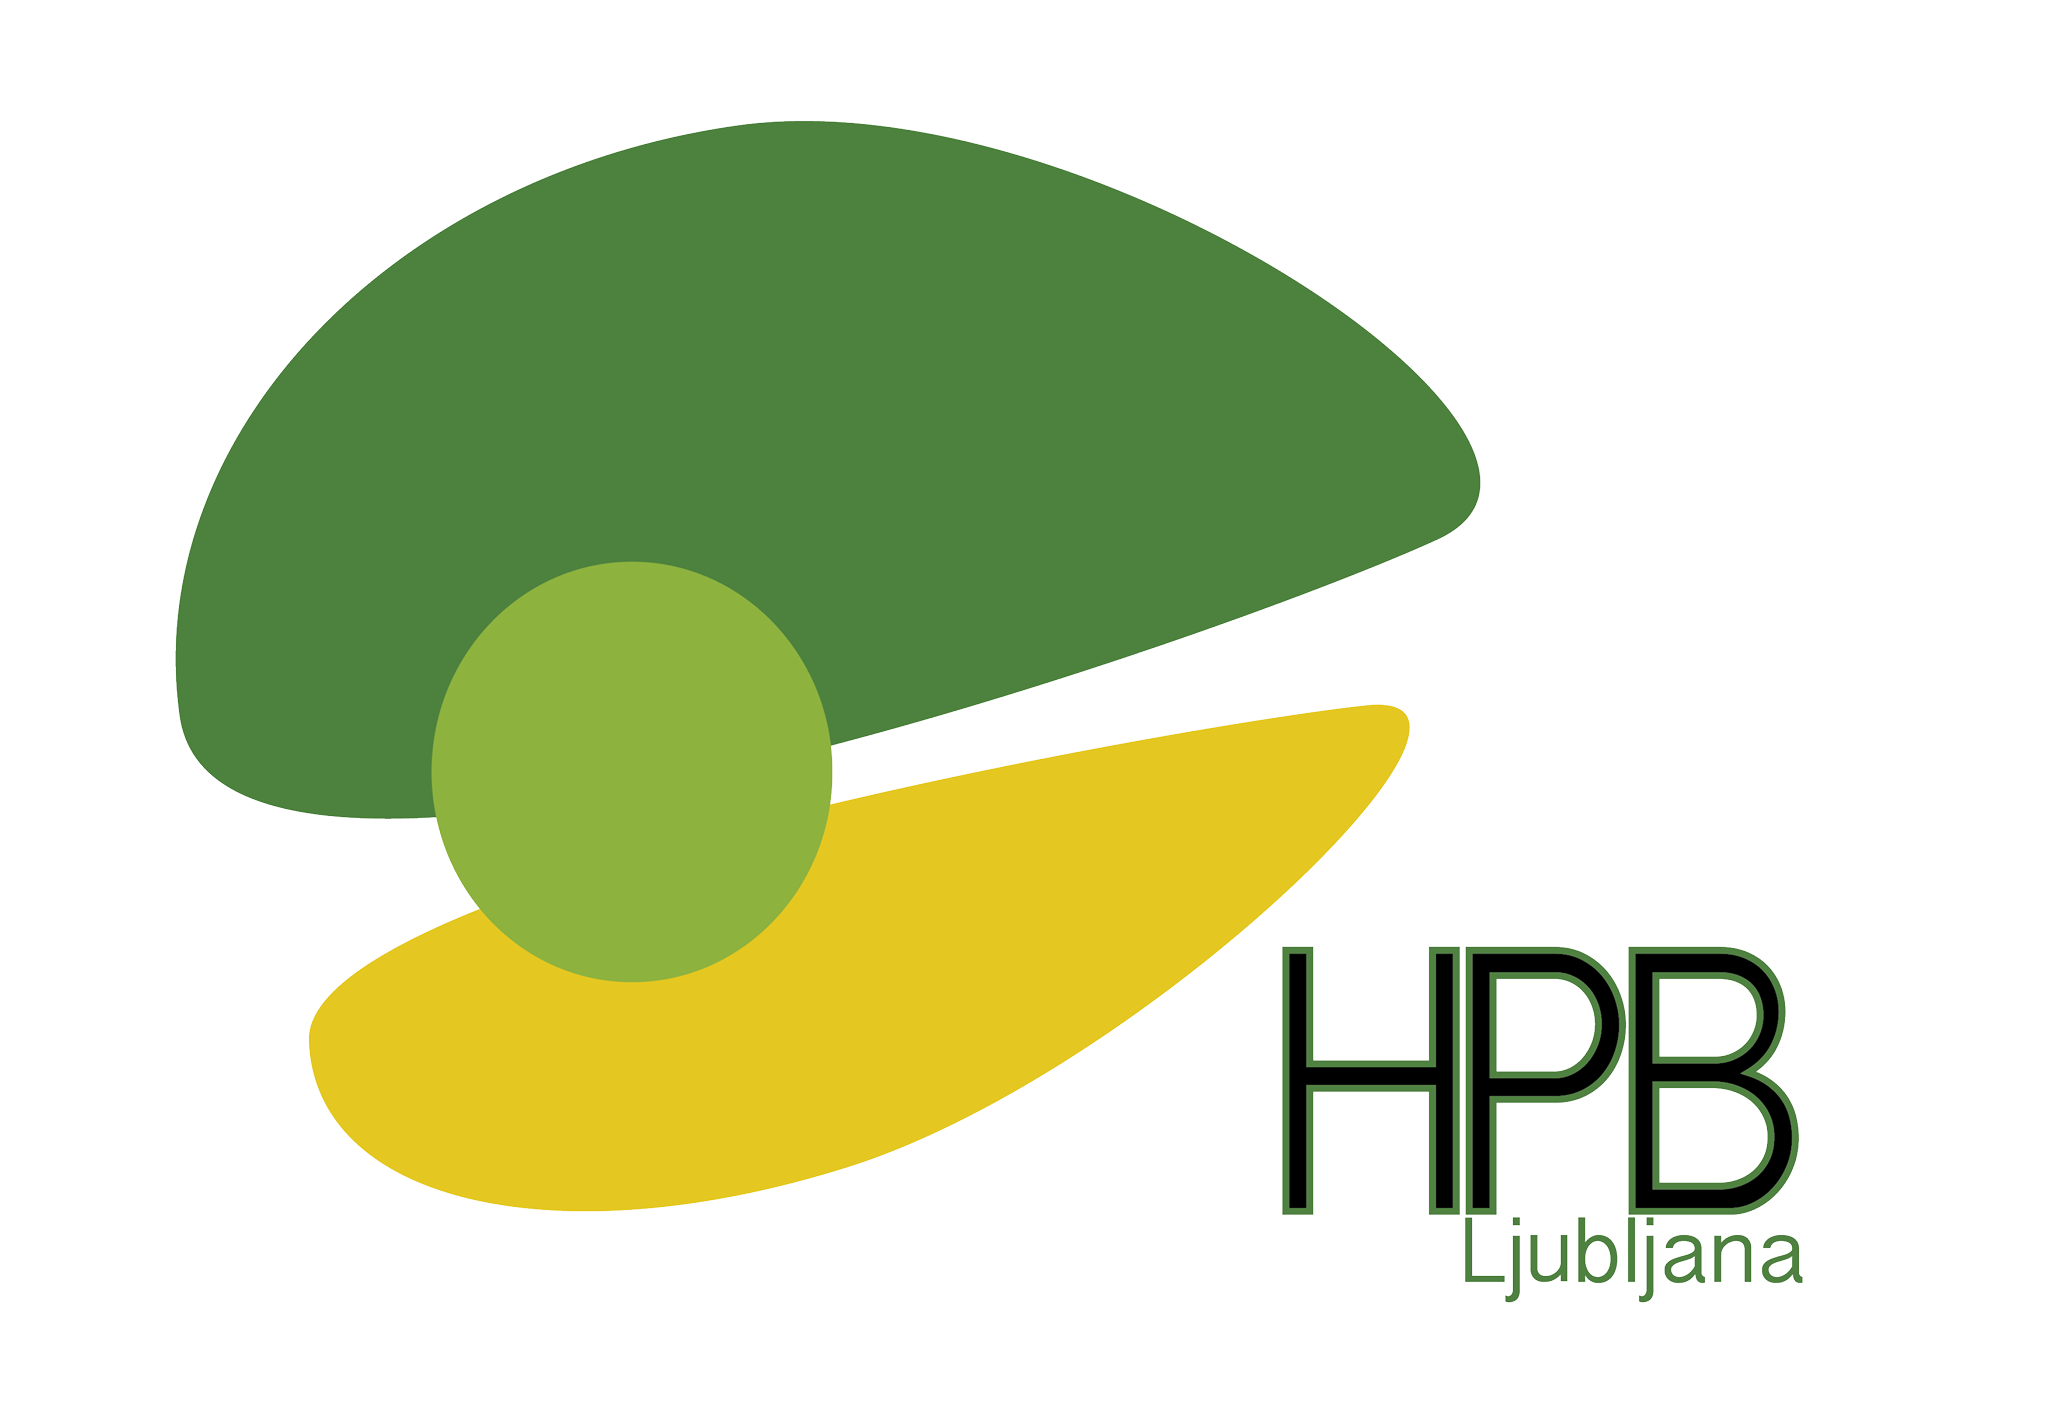 3rd Ljubljana HPB Symposium